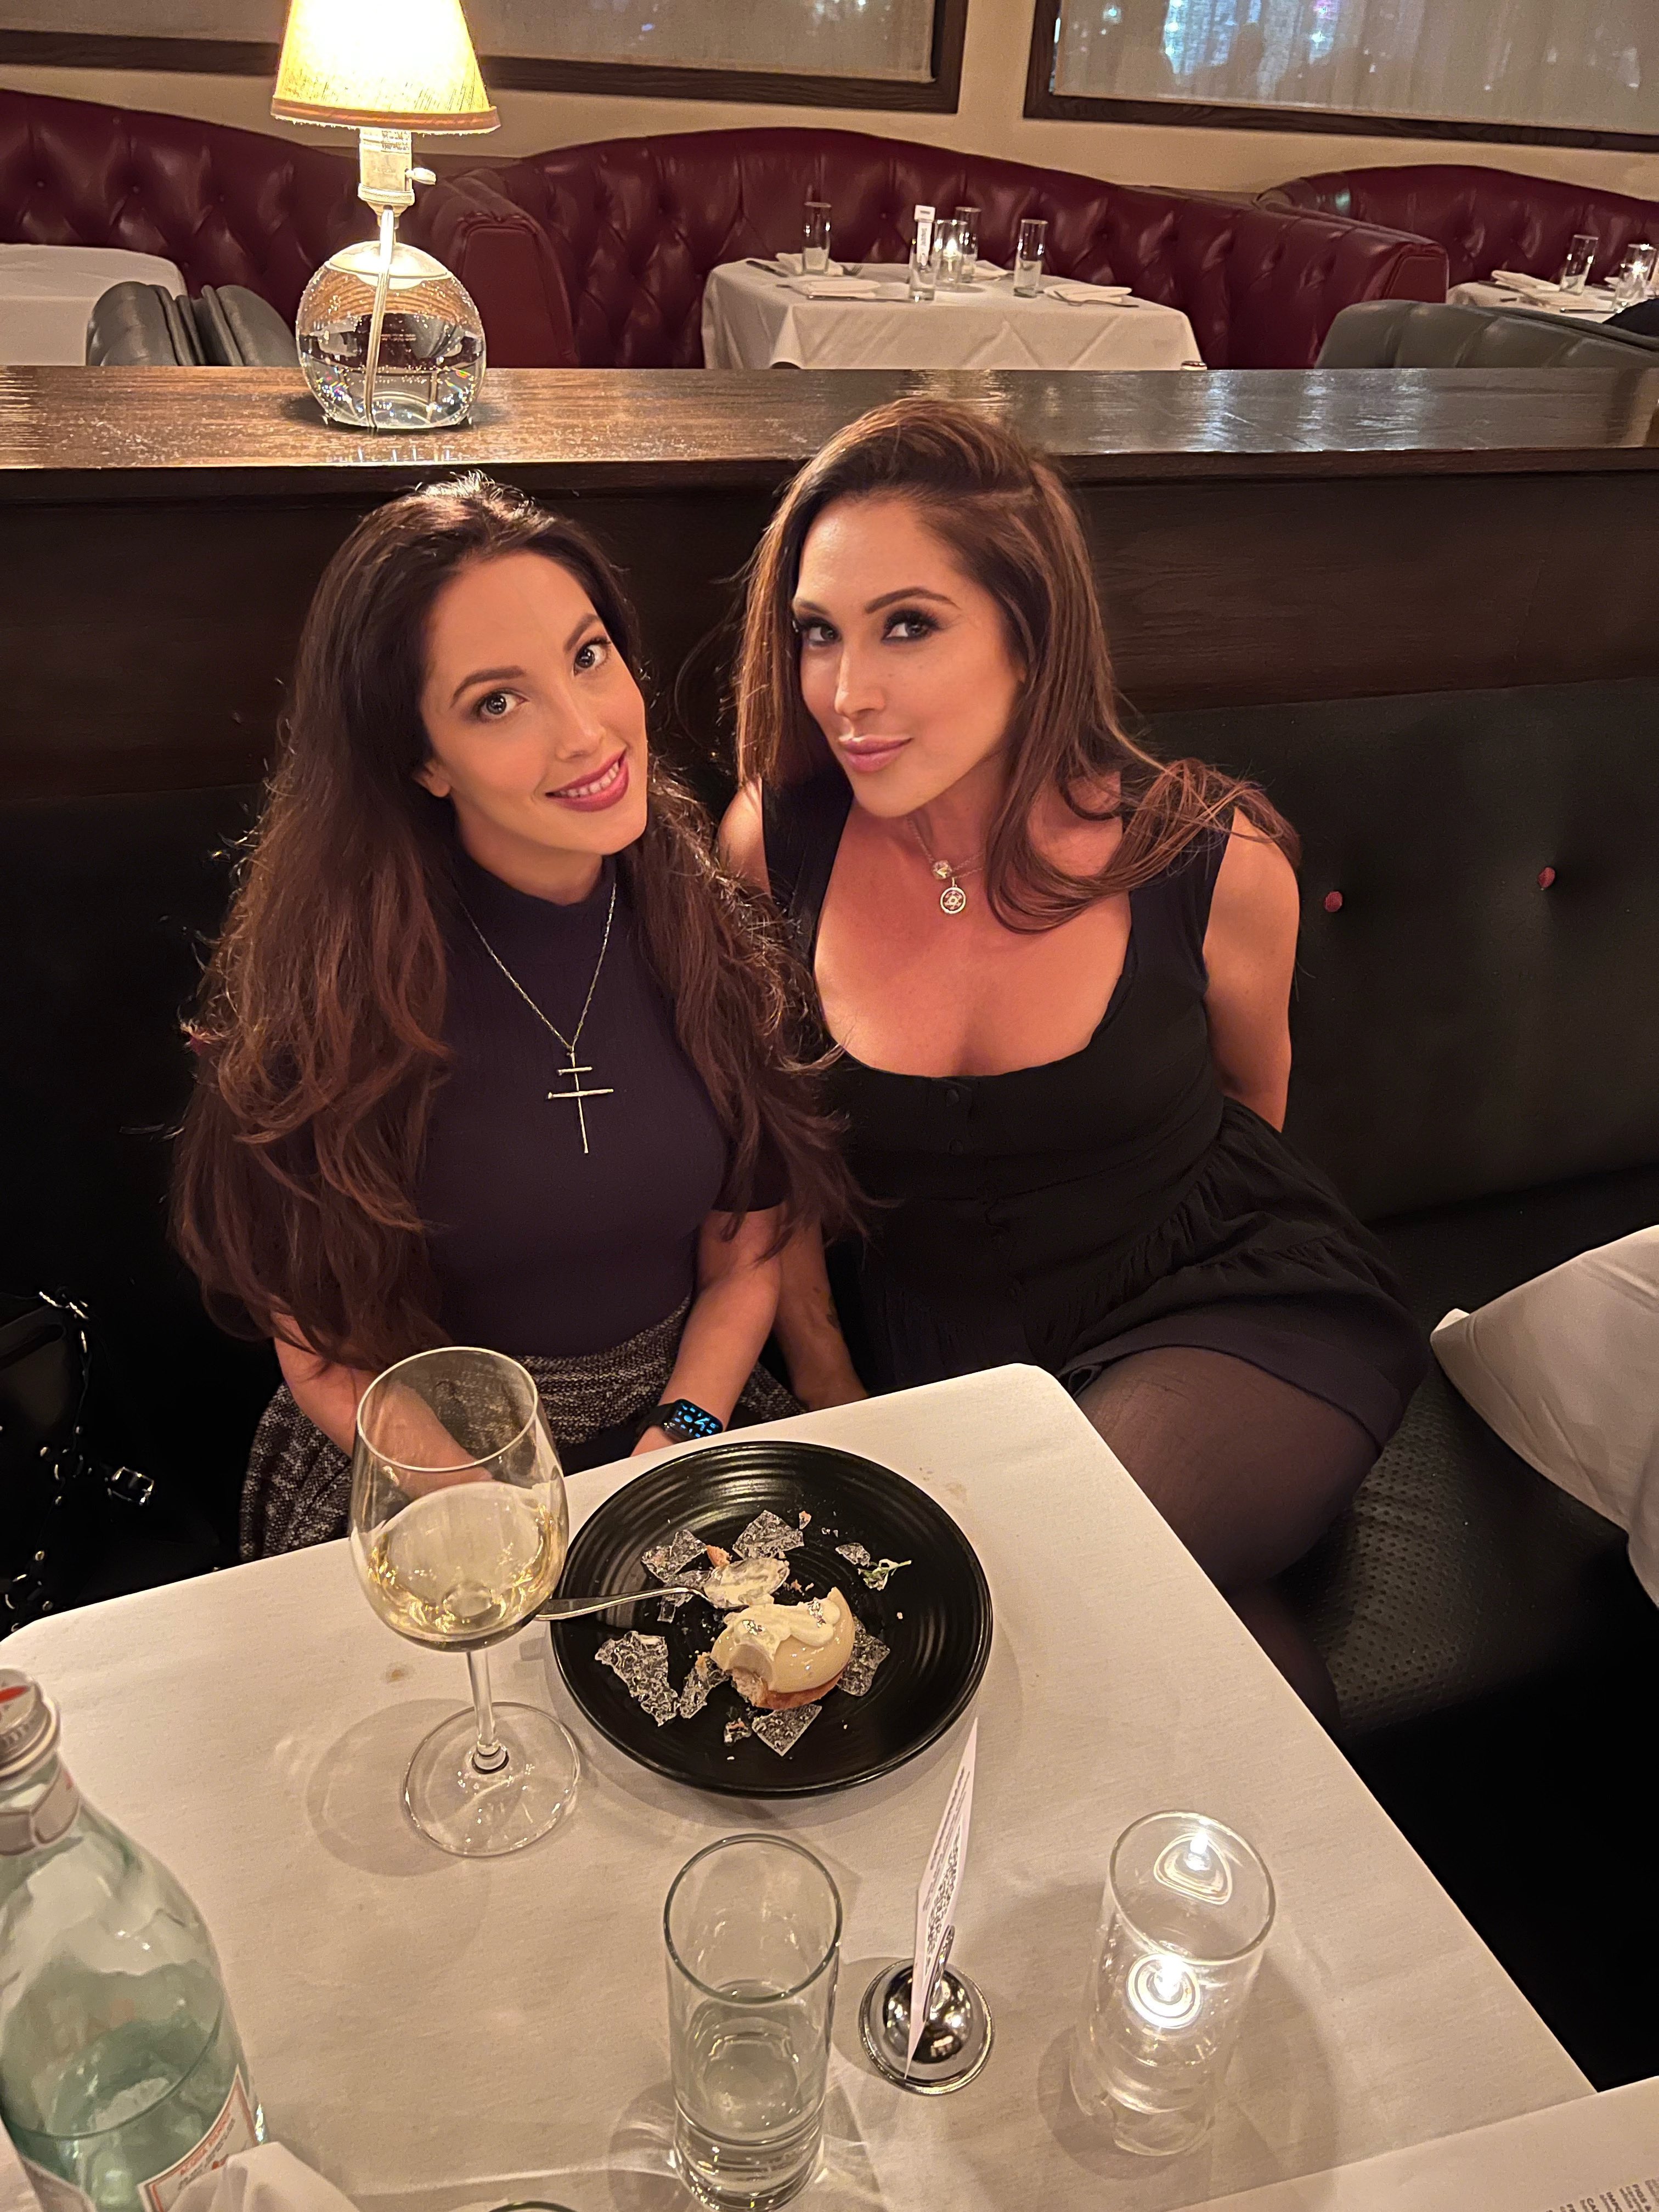 Jenna Haze on X: Really enjoyed the new fall menu last night  w/@PsychicMojan ✨ Delicious! 🤤 @Crossroads  / X